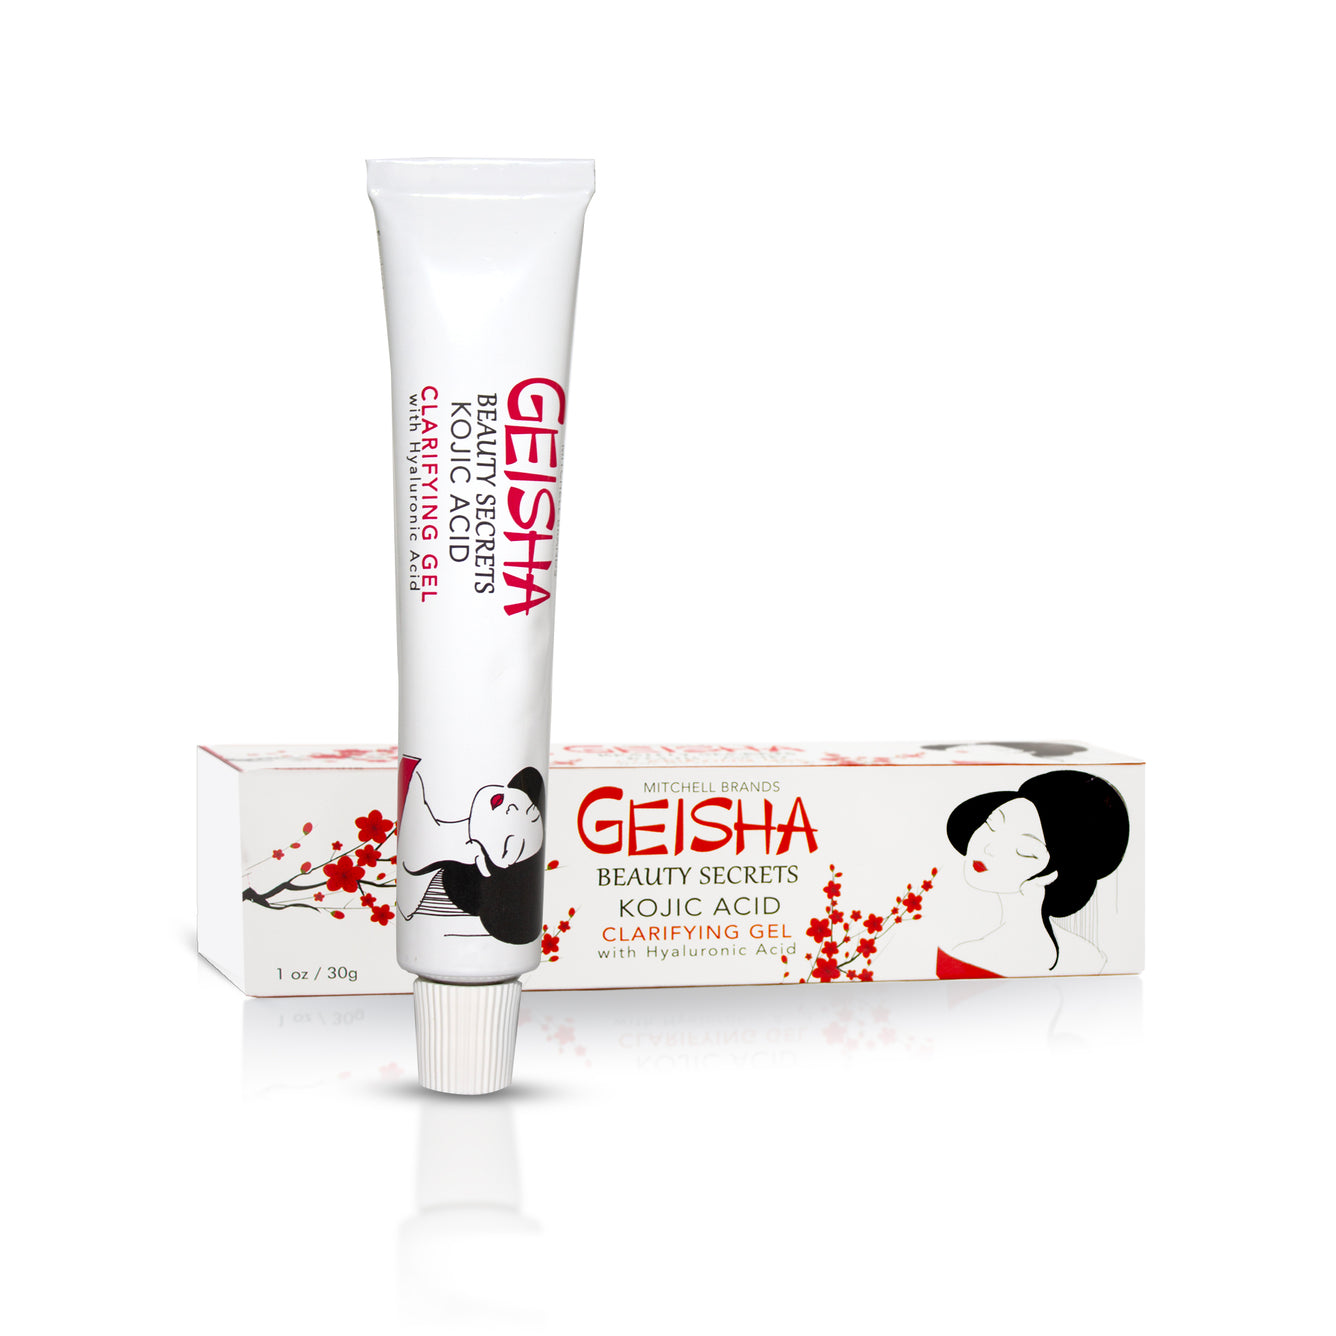 Geisha Clarifying Gel with Kojic Acid & Hyaluronic Acid 30g Mitchell Group USA, LLC - Mitchell Brands - Skin Lightening, Skin Brightening, Fade Dark Spots, Shea Butter, Hair Growth Products